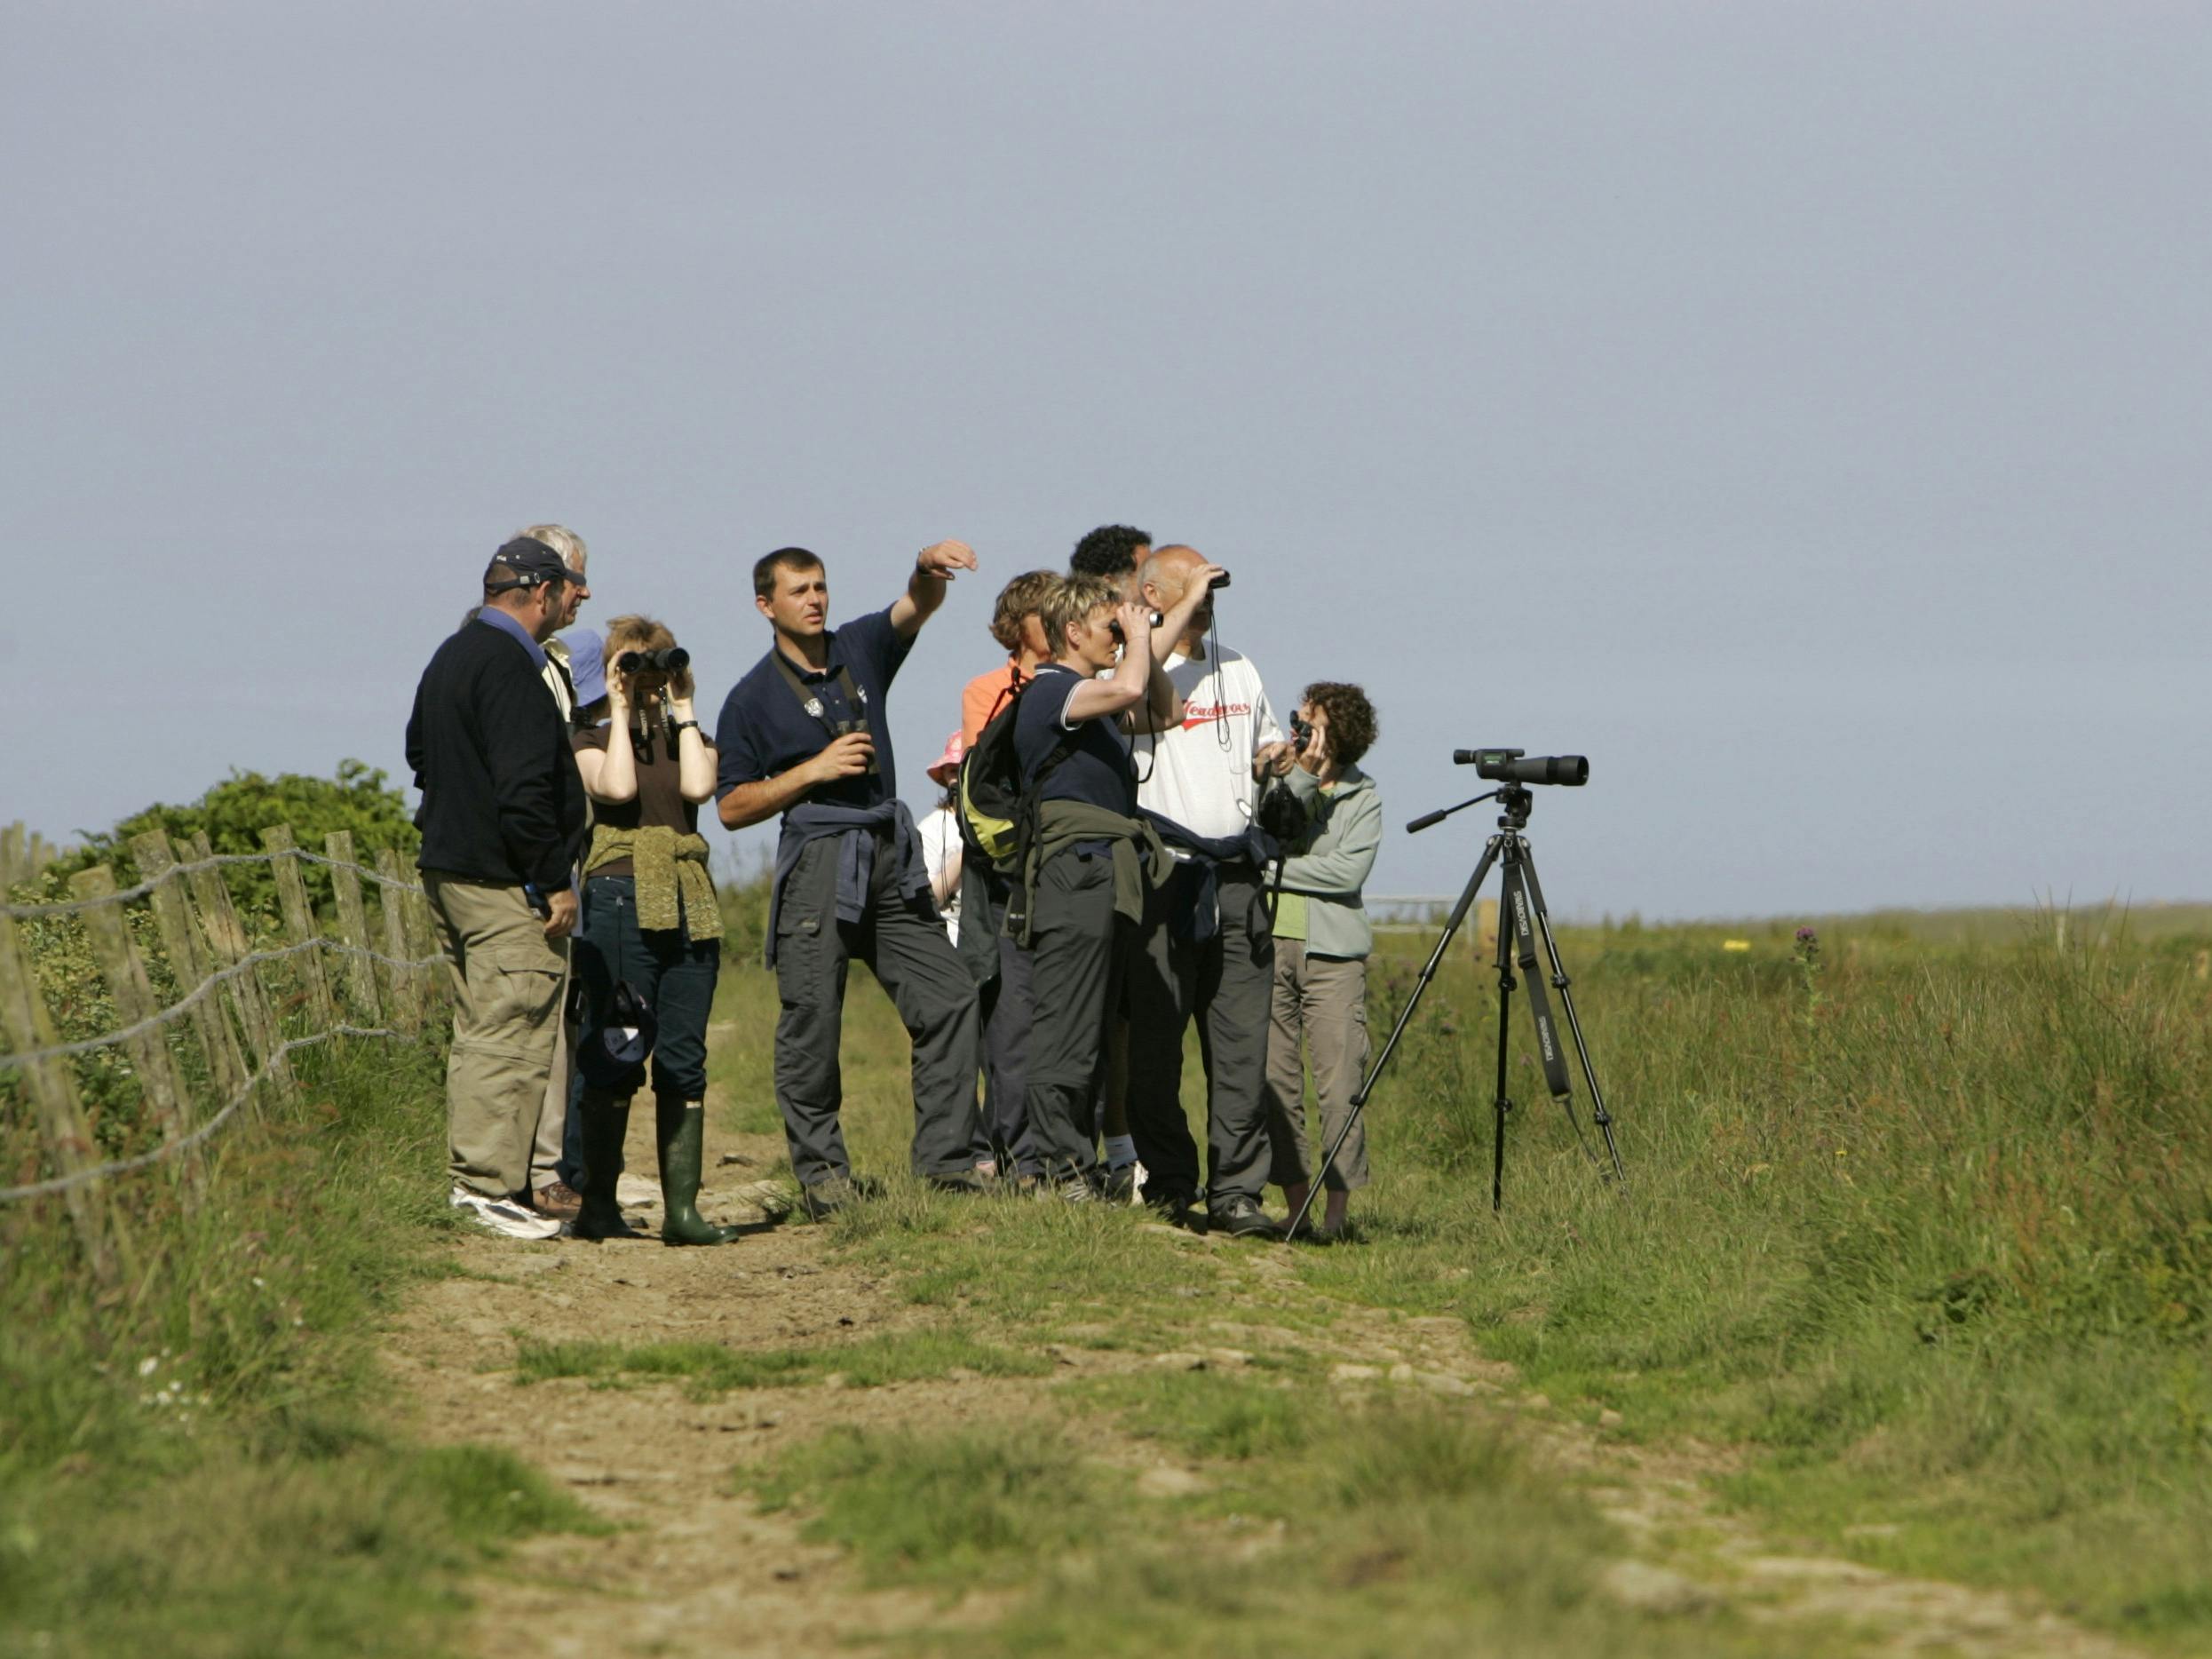 Photograph of a group of bird watchers with binoculars